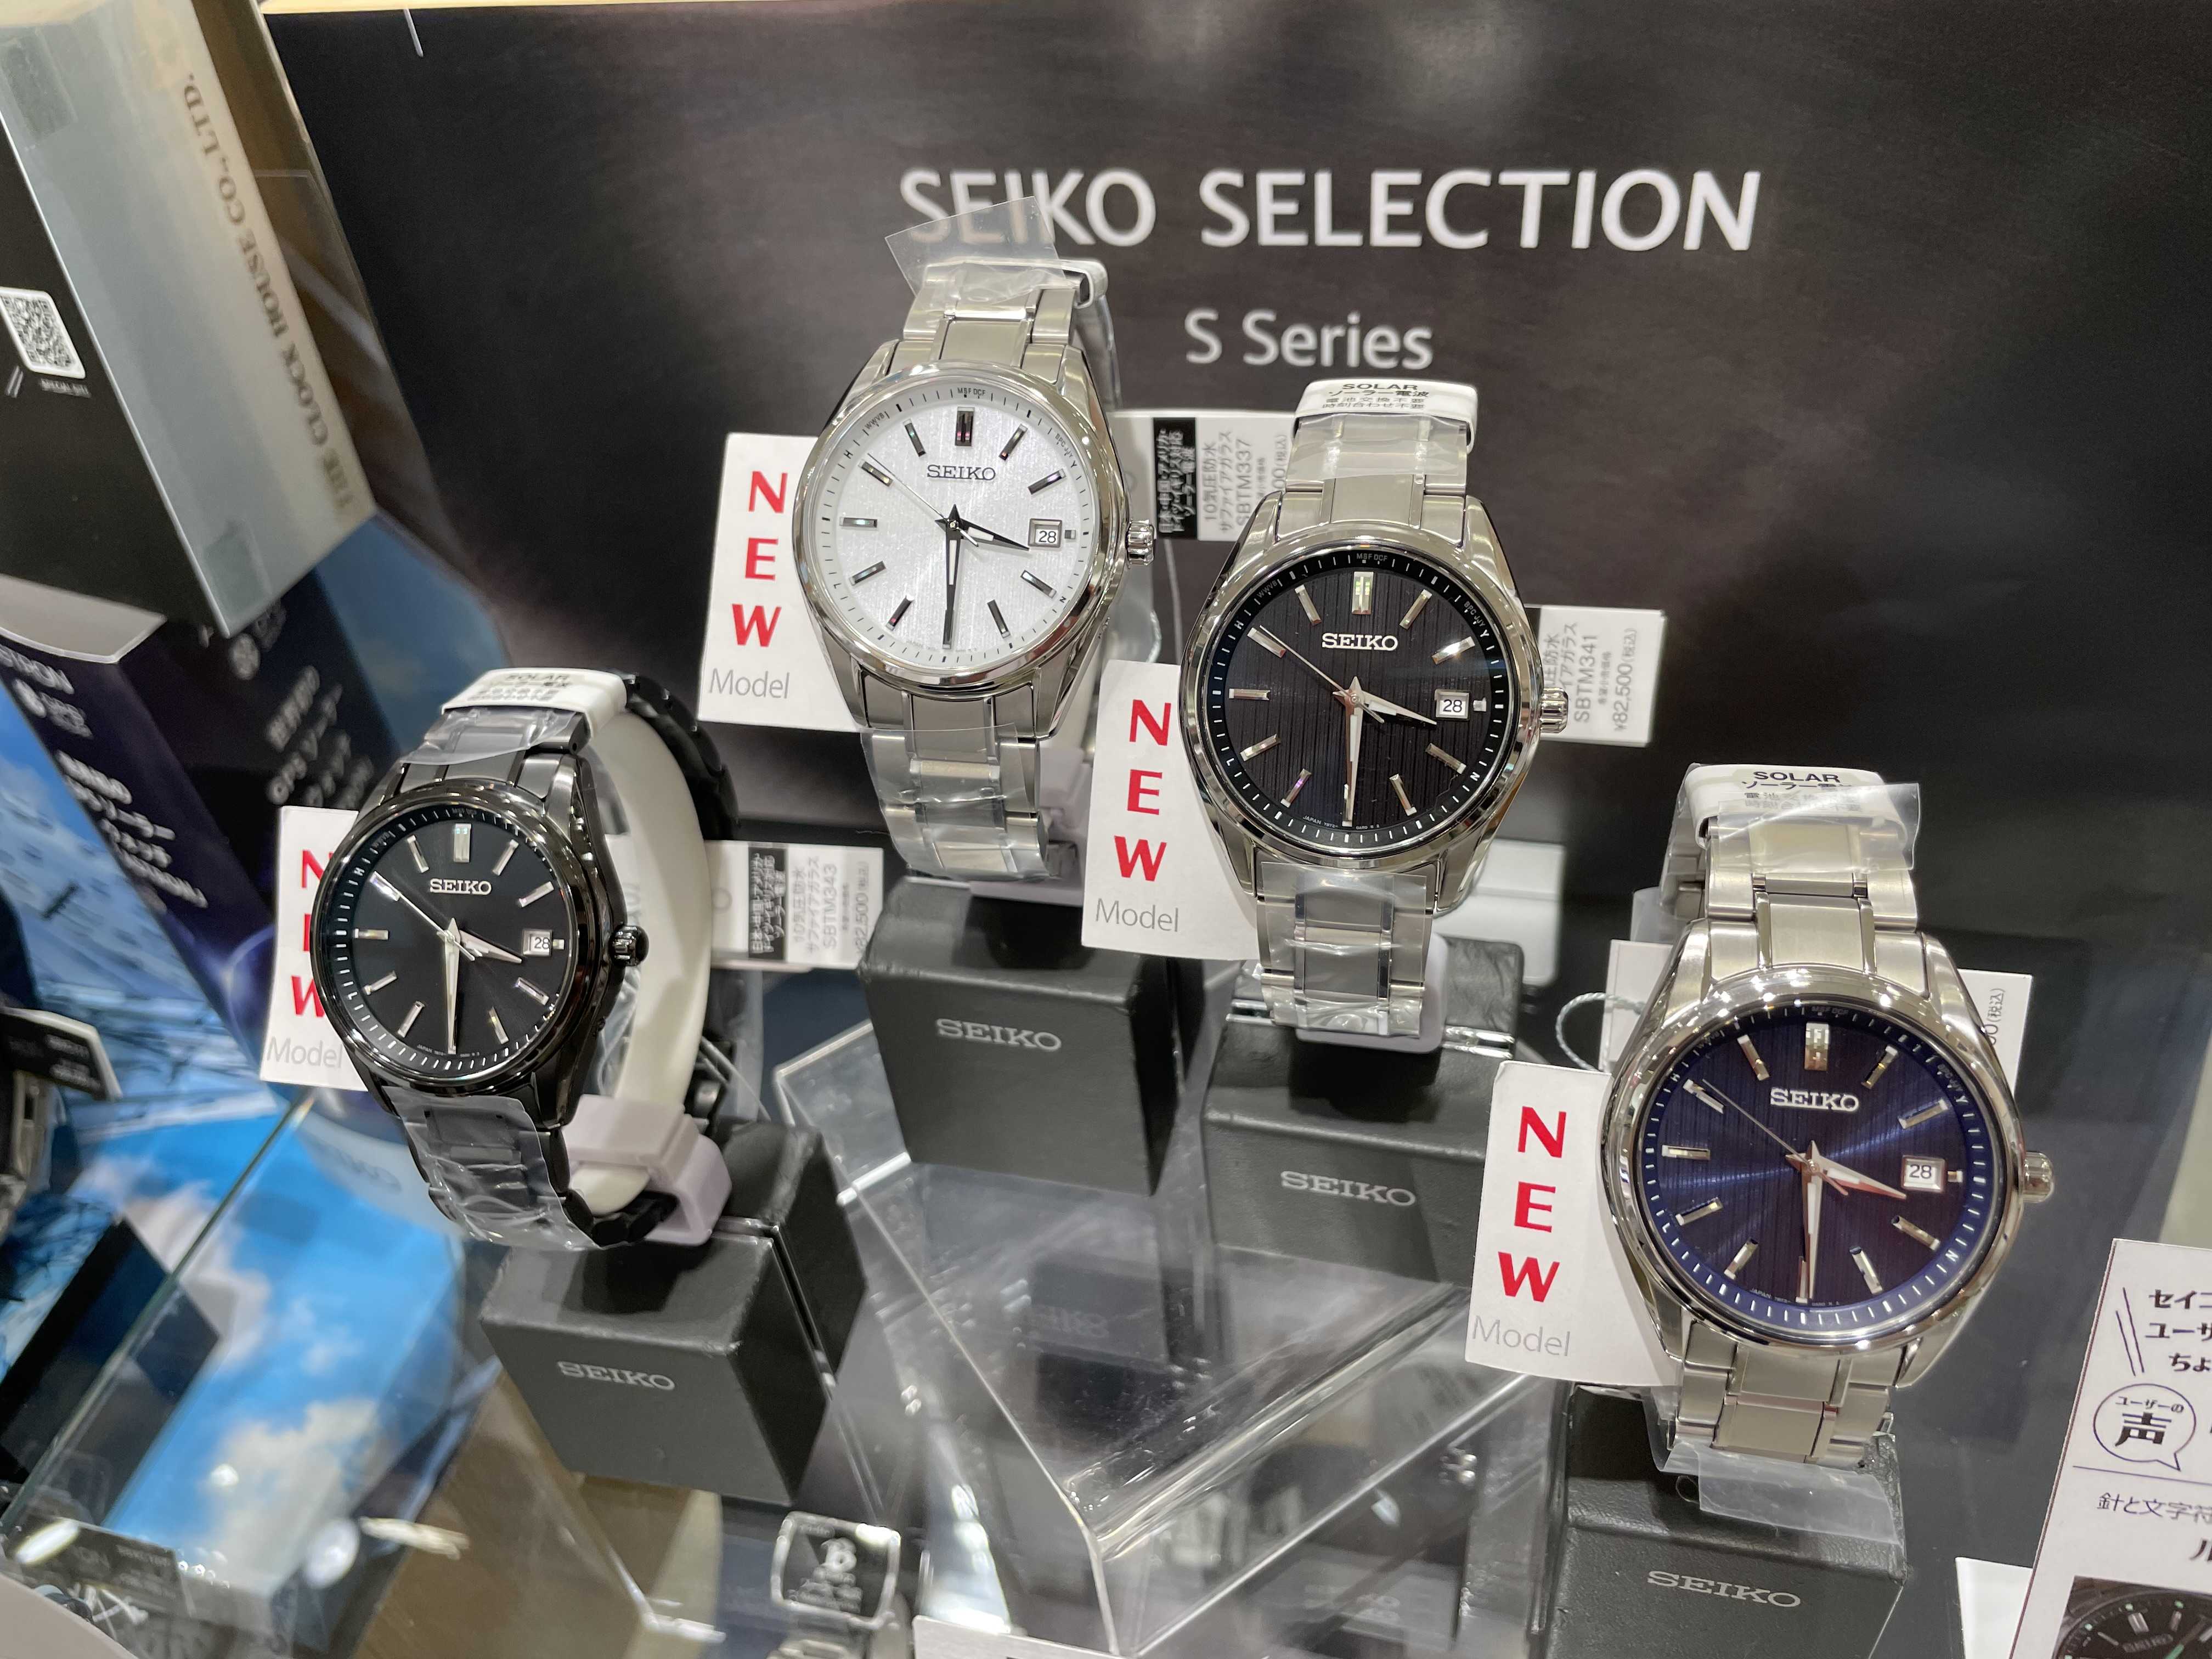 SEIKO SELECTIONよりプレミアムなチタン製ソーラー電波時計登場